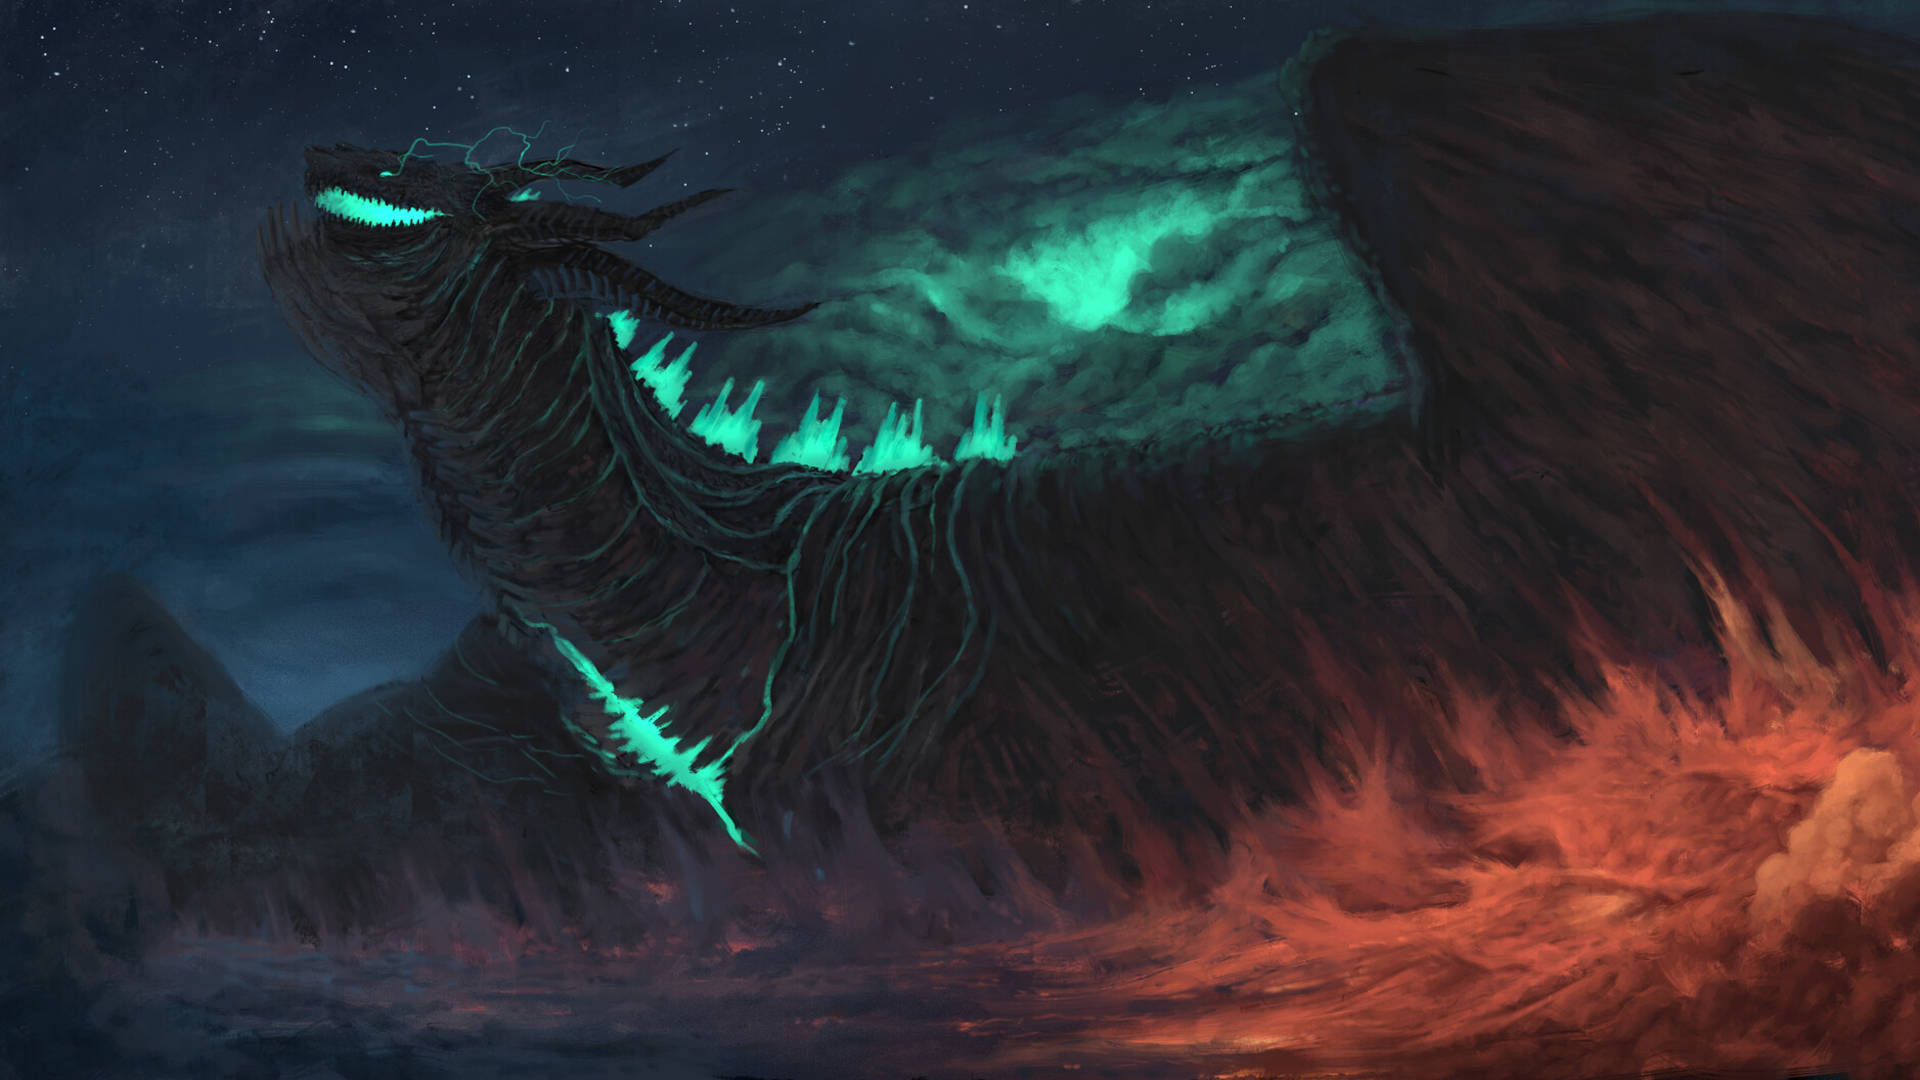 Coolest Dragon Fantasy Dominator Of Storms Digital Art Wallpaper